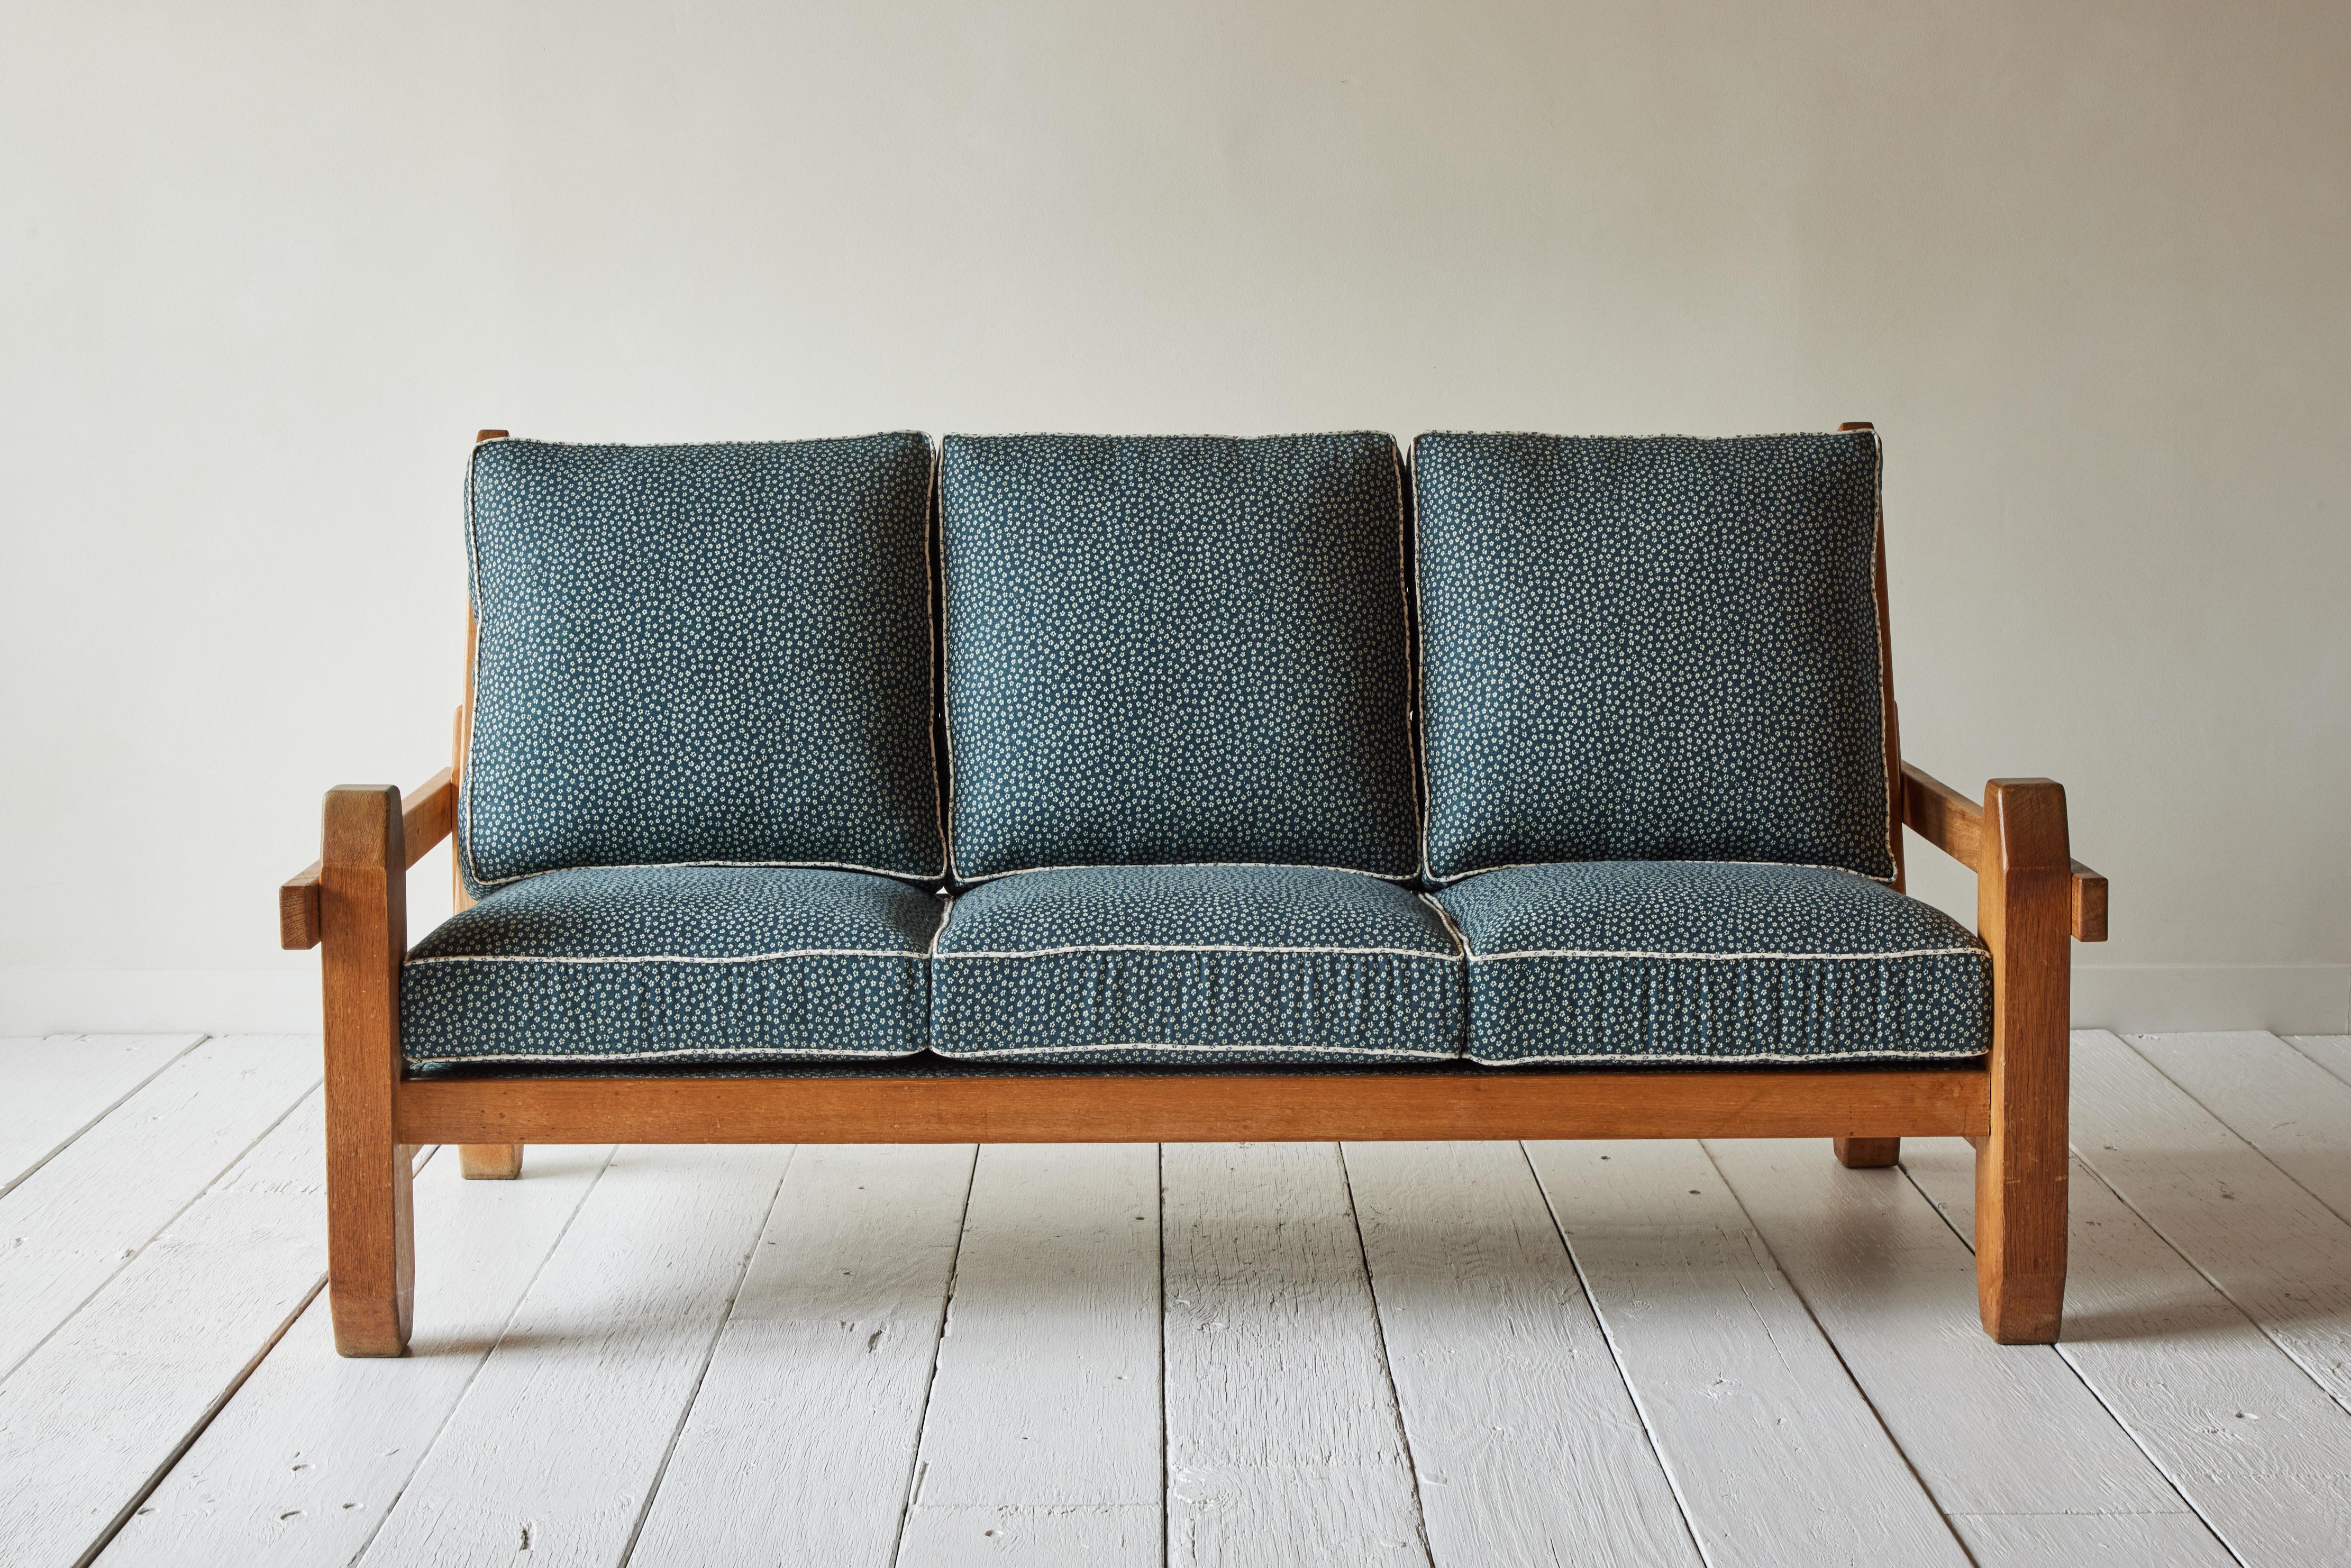 Vintage pine sofa in the style of Ape van Apeldoorn upholstered in a Robert Kime indigo fabric.